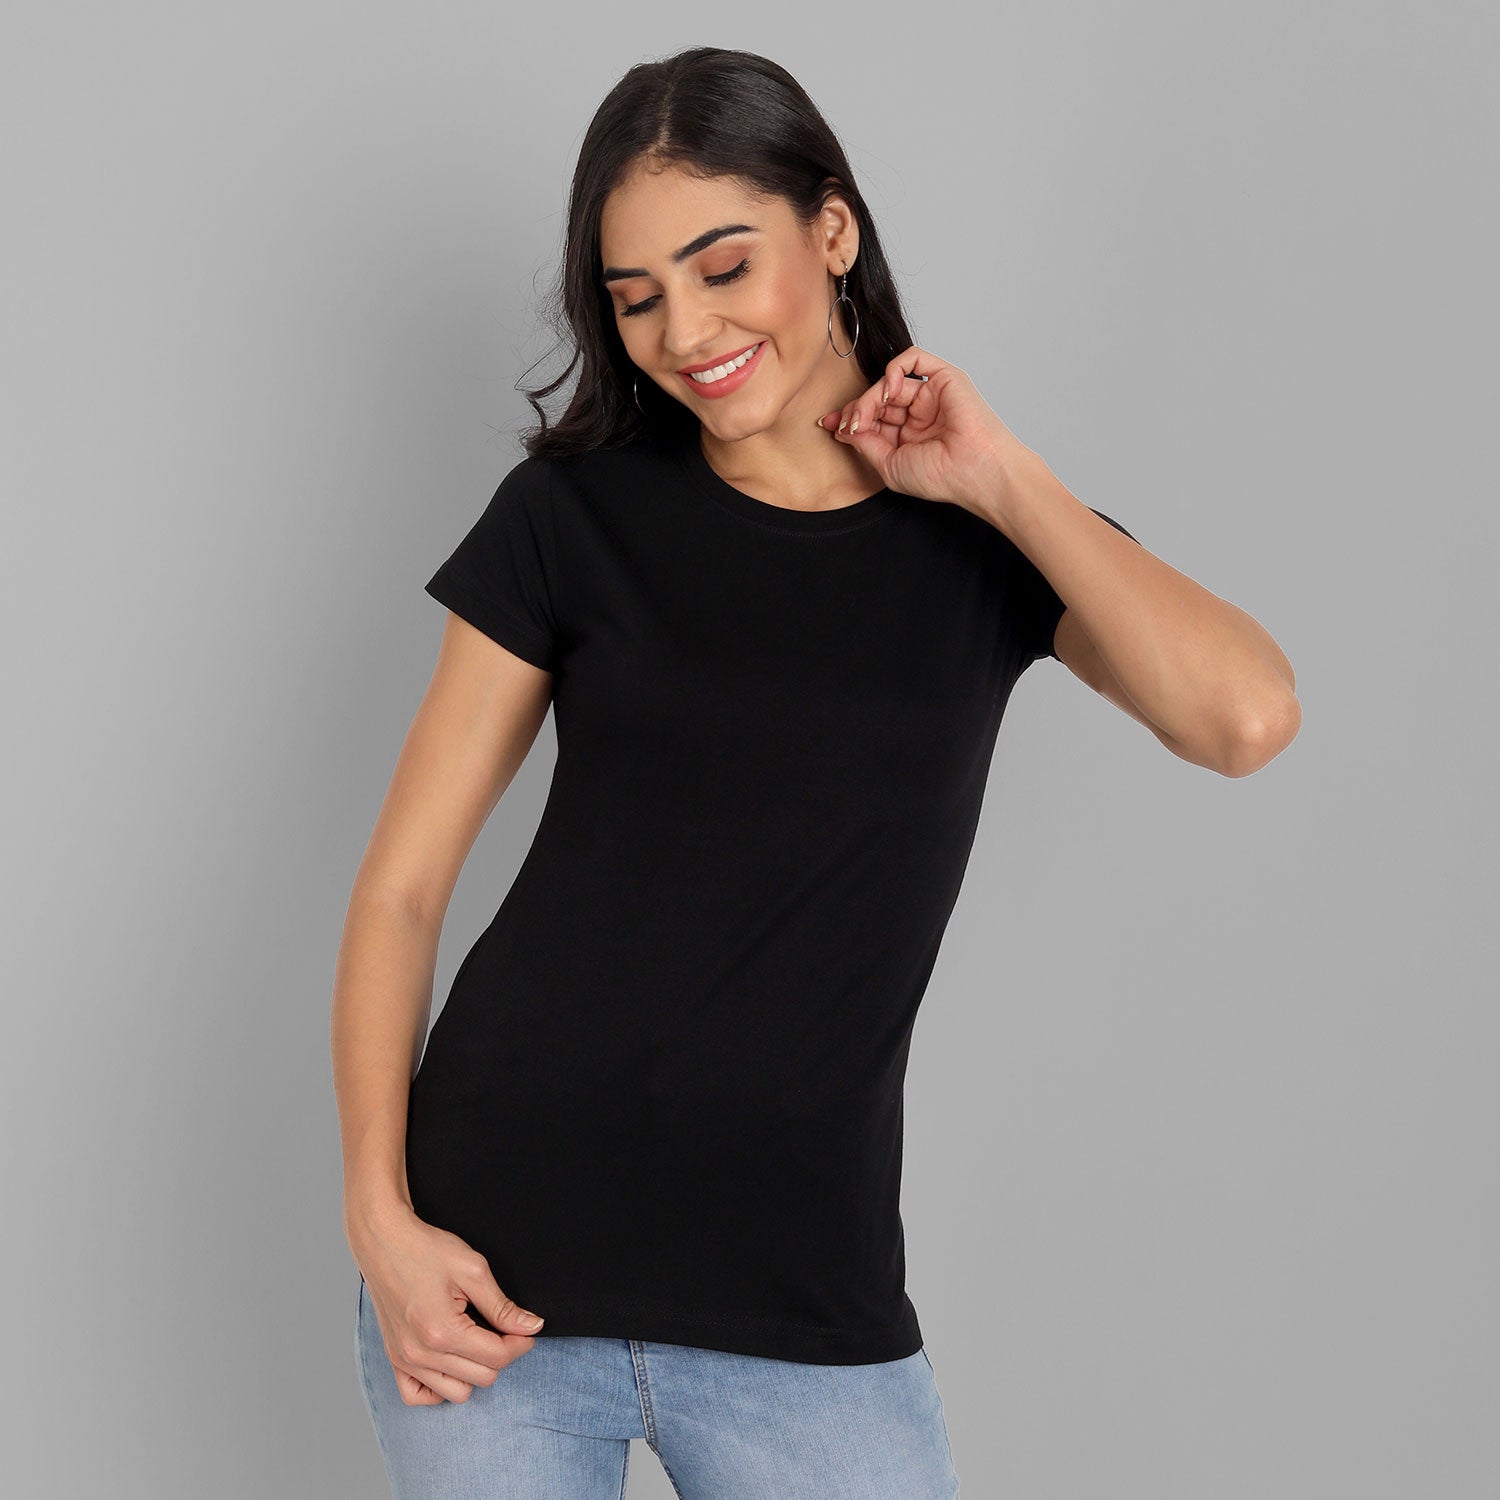 Woman's Black Half Sleeve T-shirt